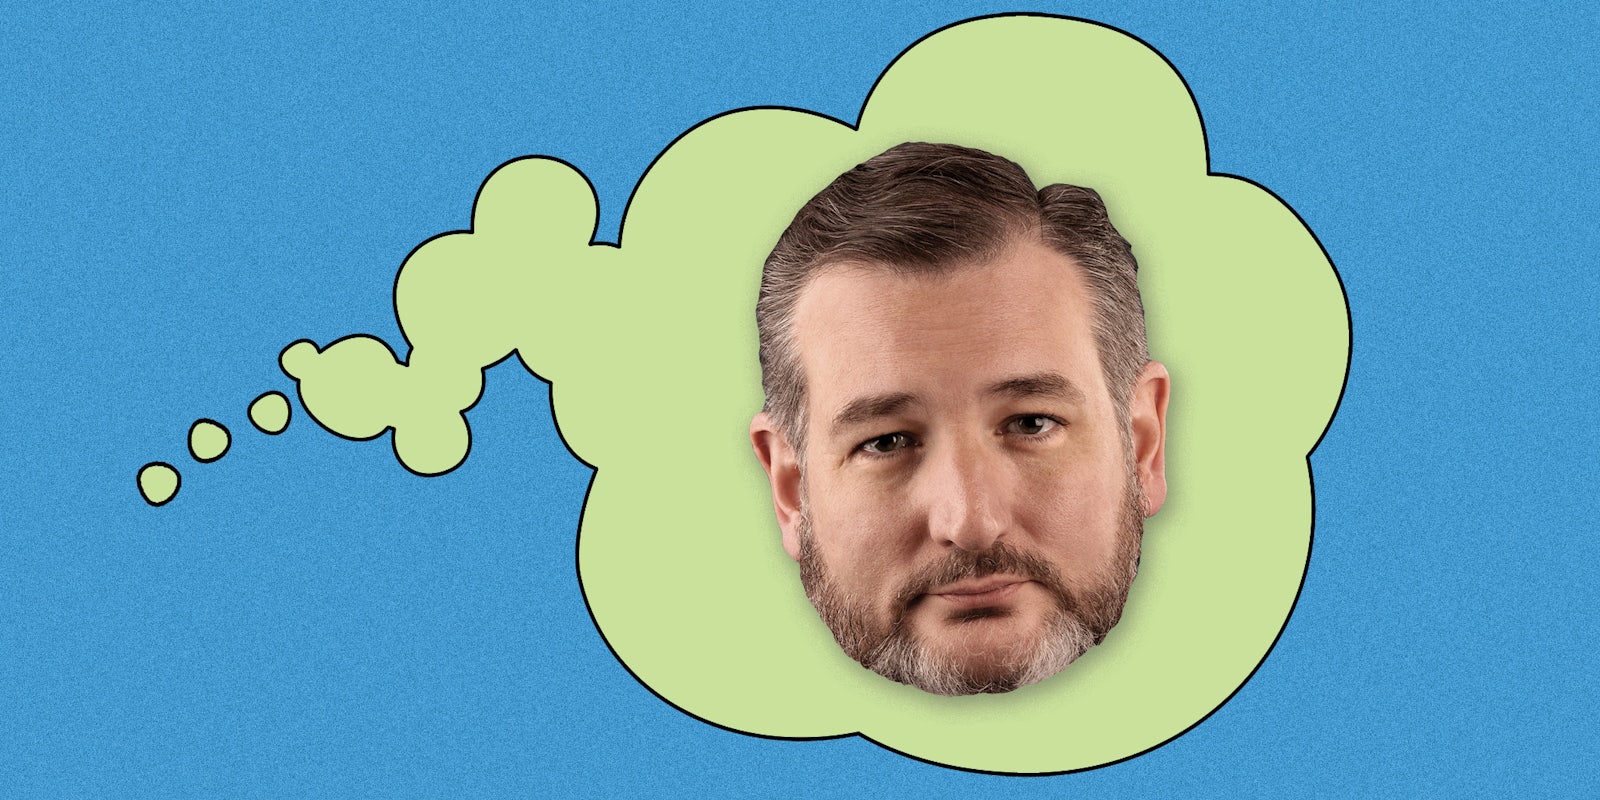 Ted Cruz's head in a fart bubble.